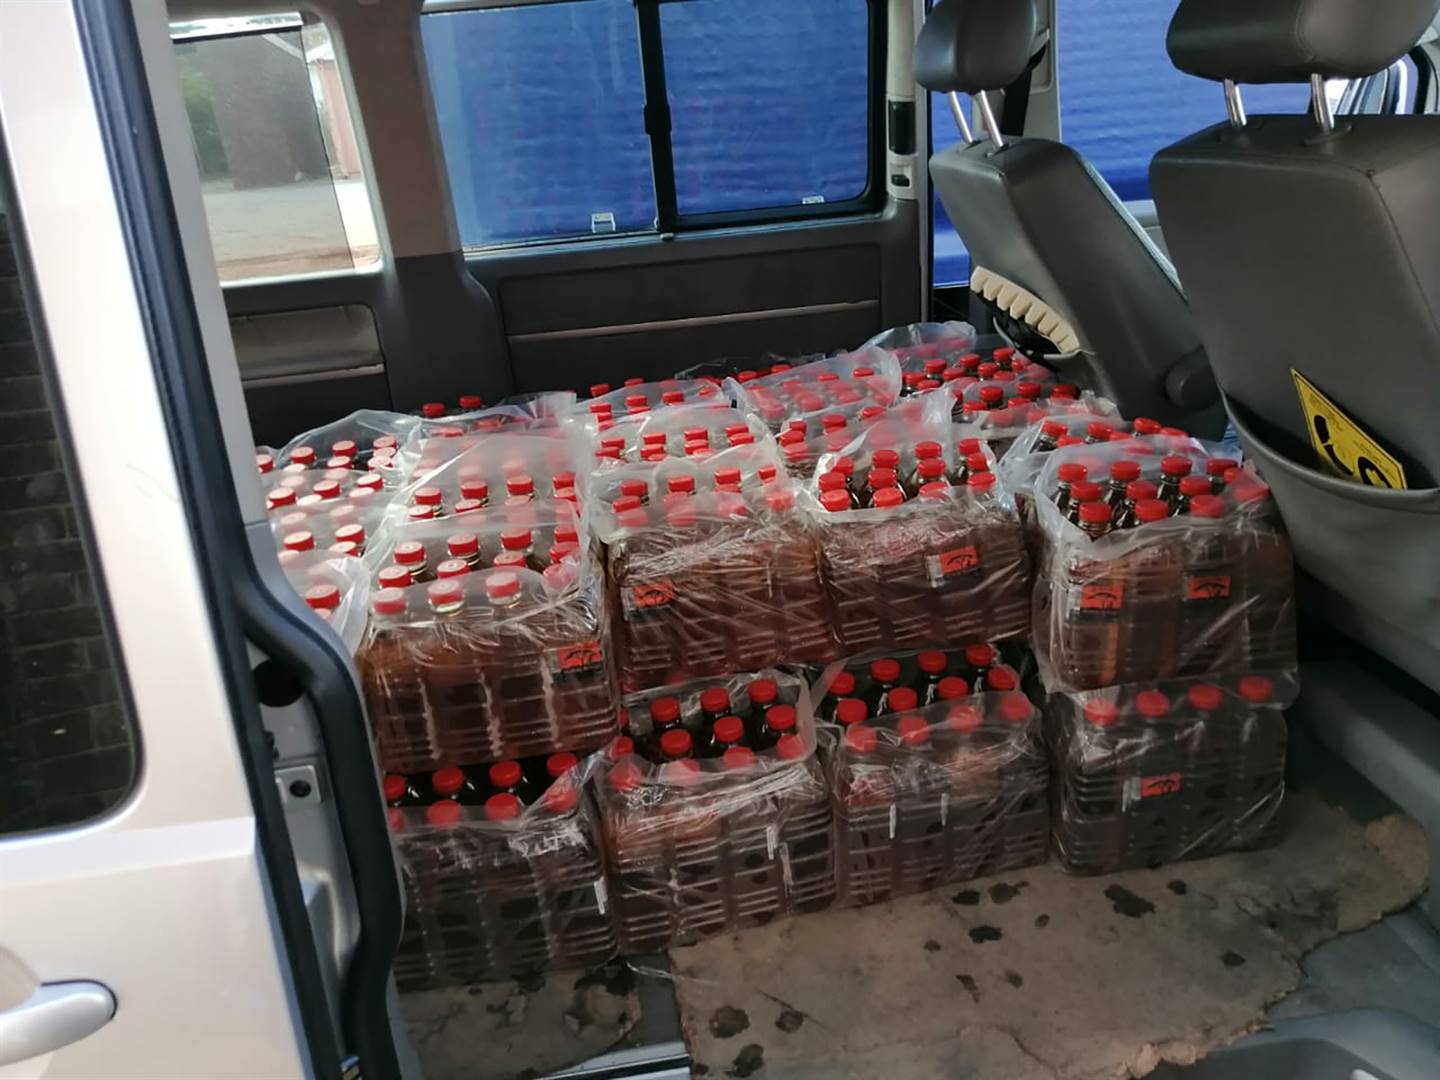 Police confiscated bottles of booze in Kinkelbos near Port Elizabeth. 